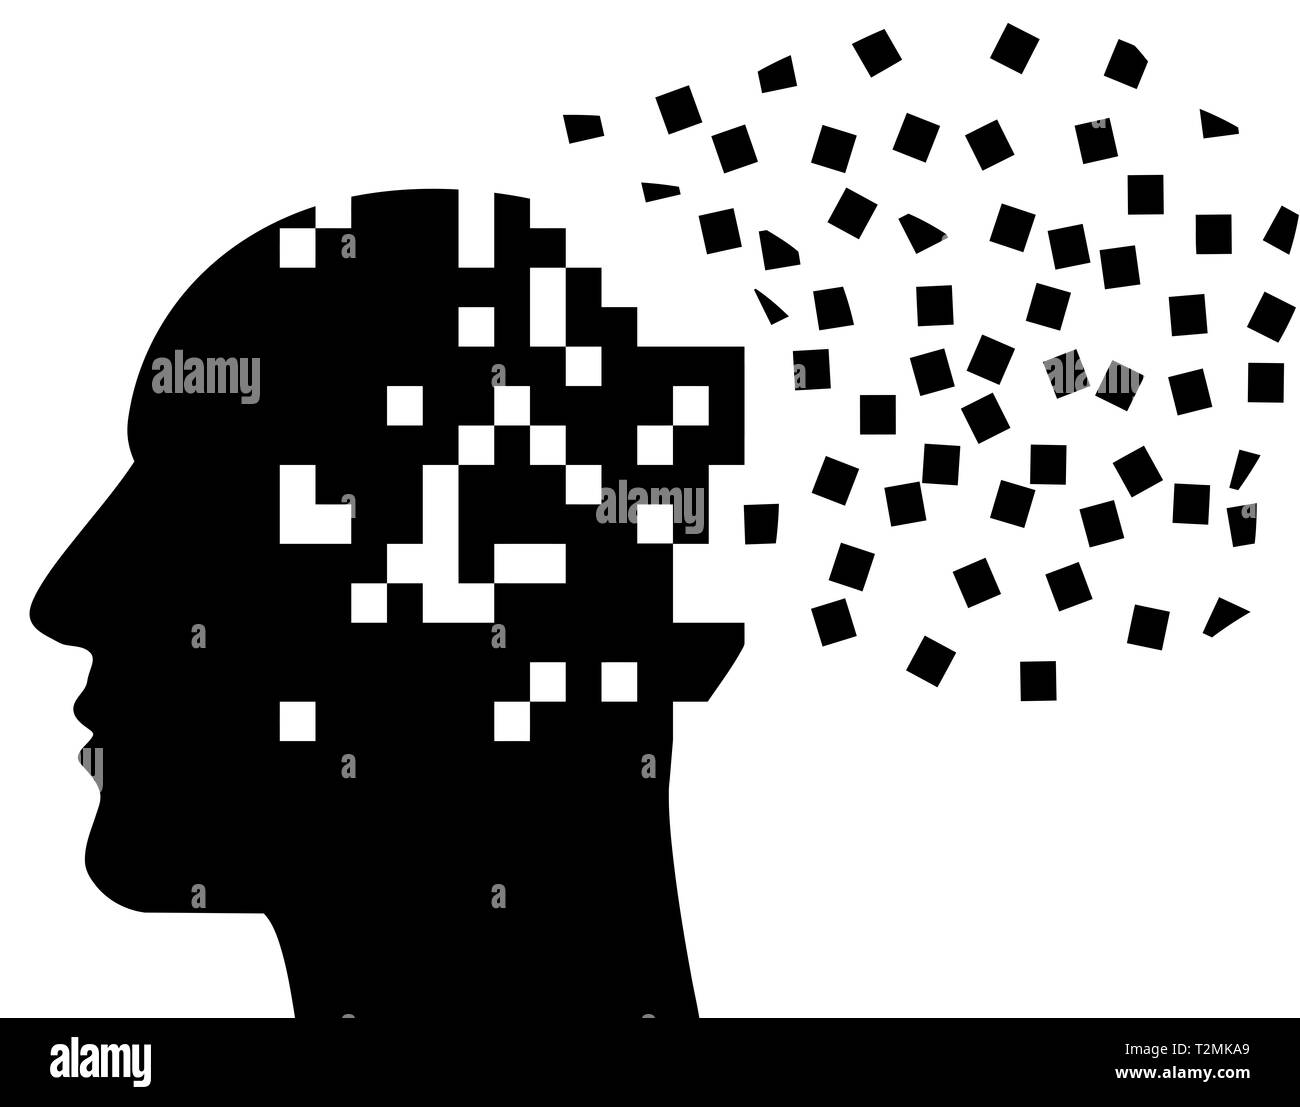 mental mind thought brain learning ideas illustration Stock Photo